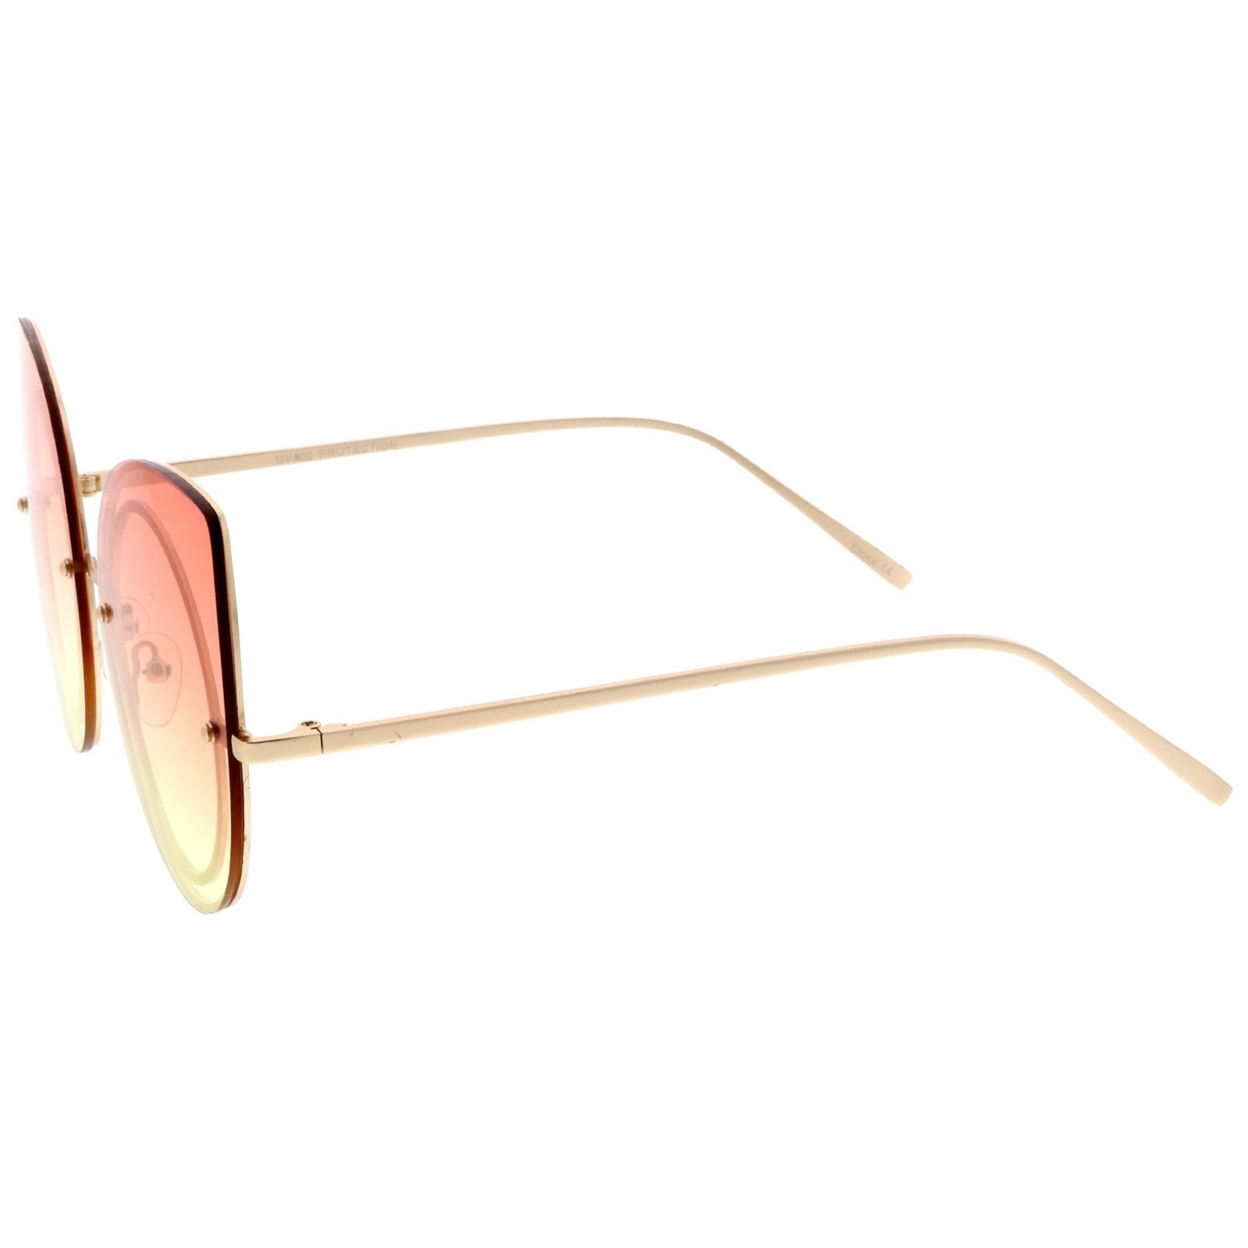 Women's Oversize Rimless Colored Gradient Flat Lens Cat Eye Sunglasses 63mm - Silver / Purple-Pink